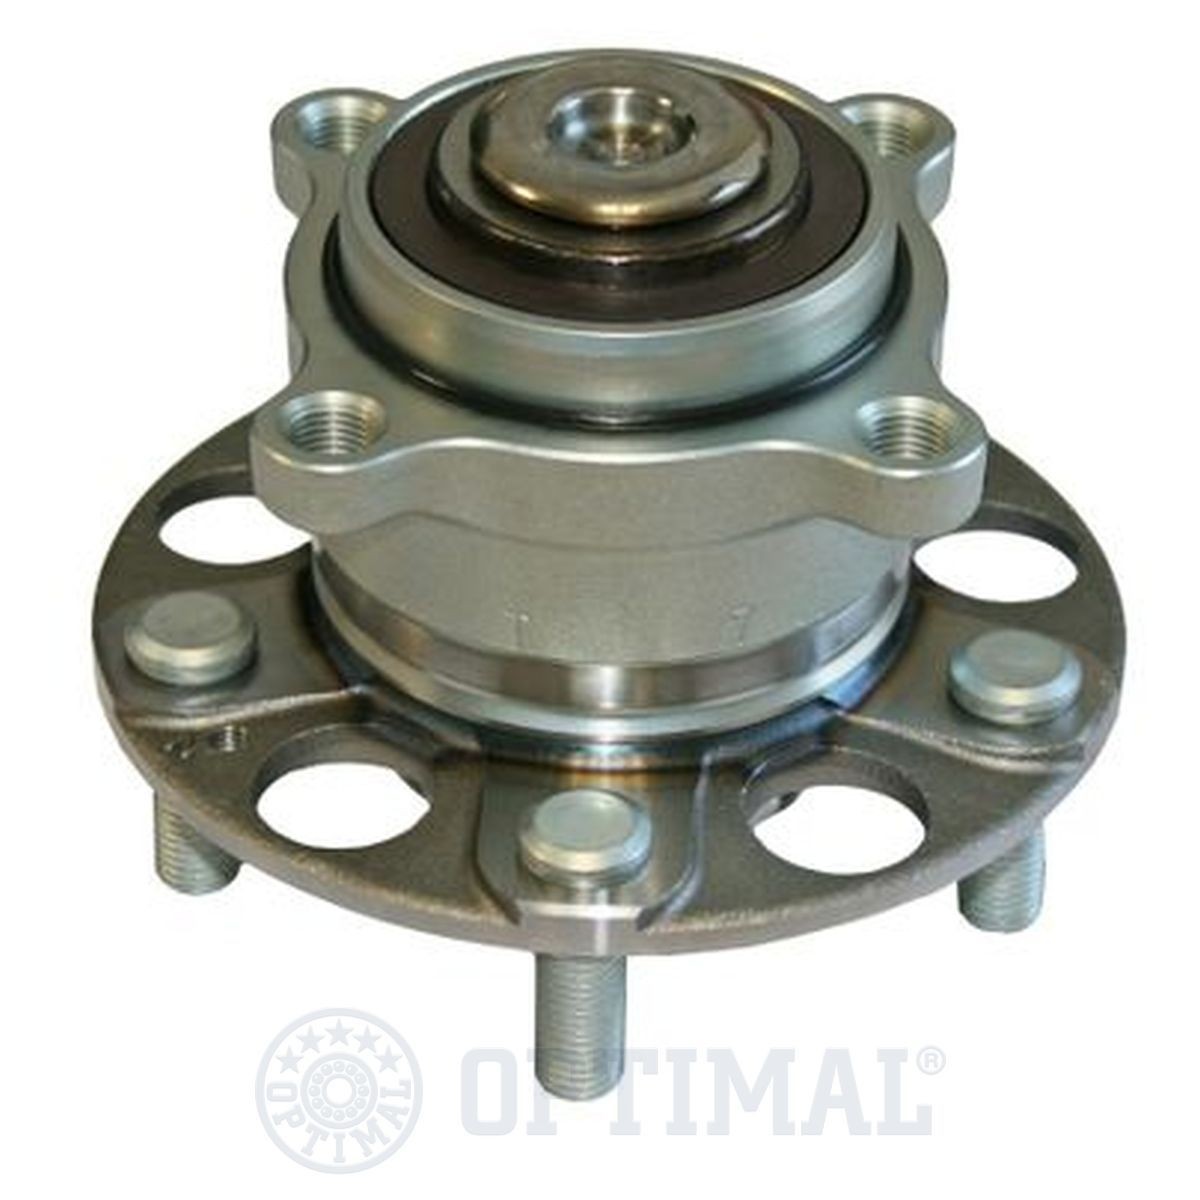 OPTIMAL 912302 Wheel bearing kit with integrated magnetic sensor ring, 140 mm